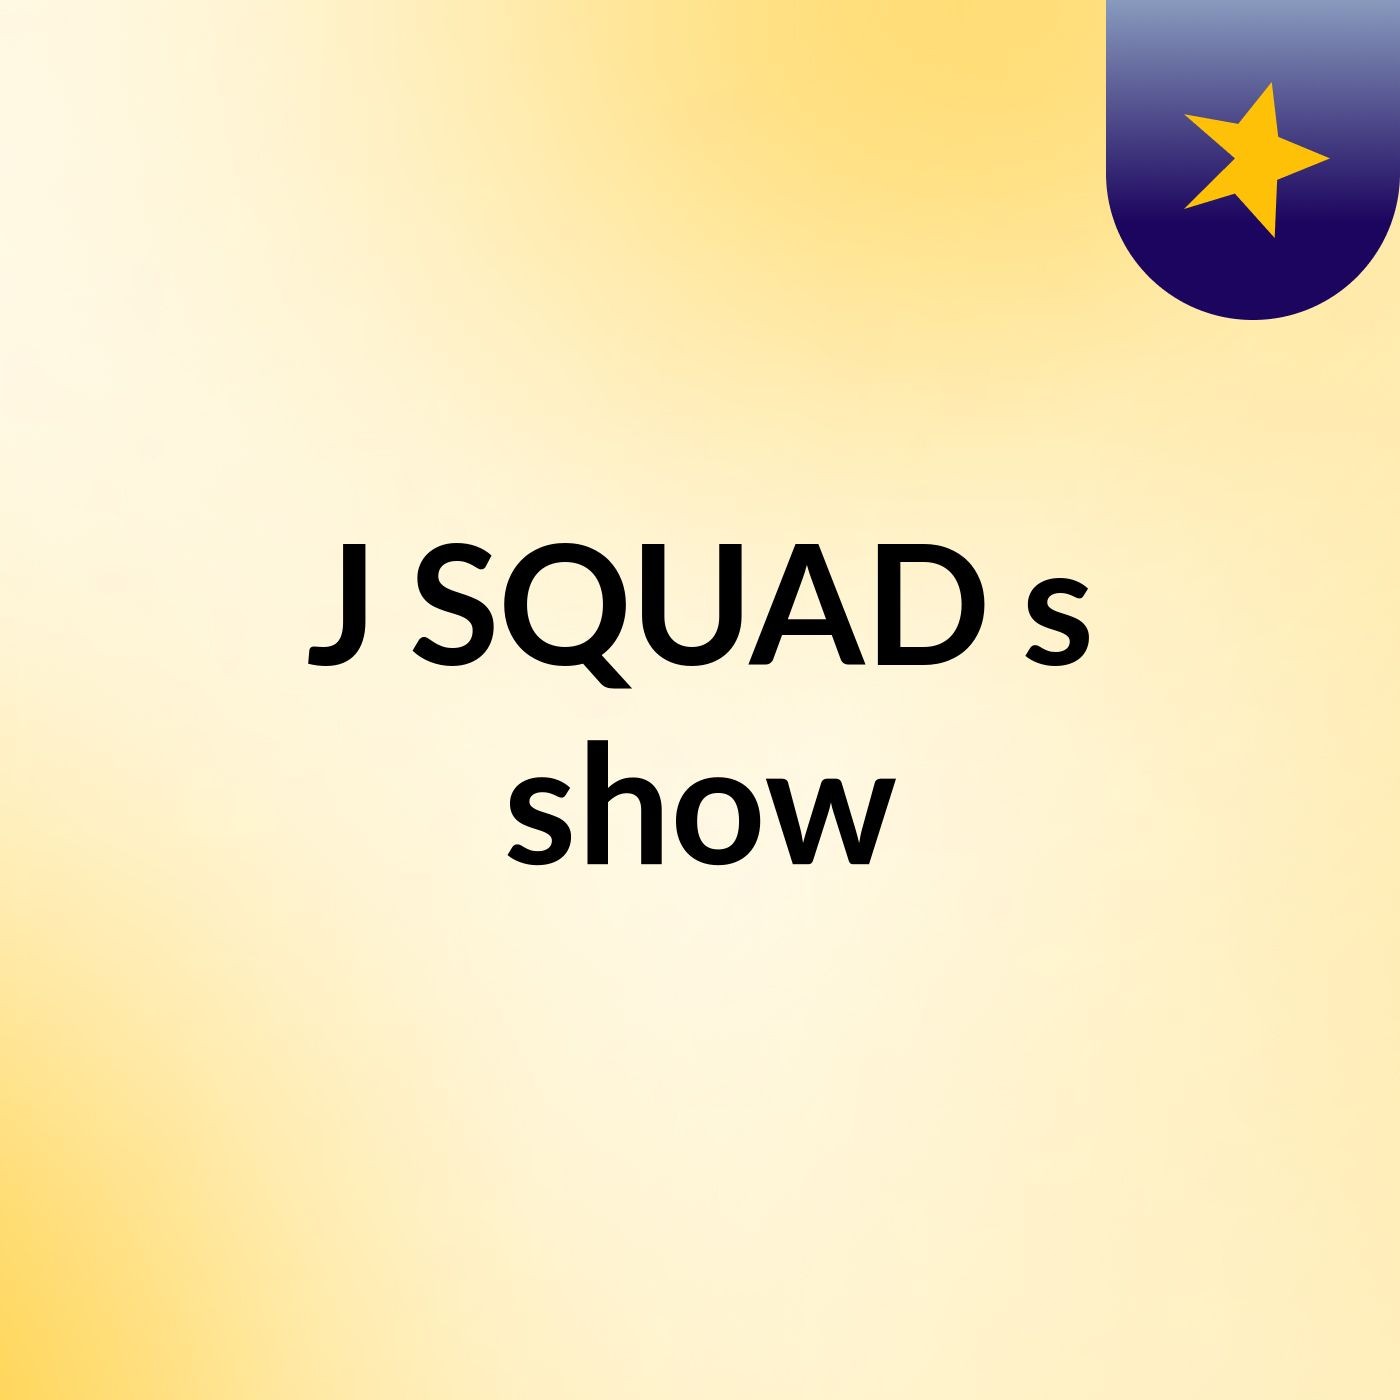 J SQUAD's show